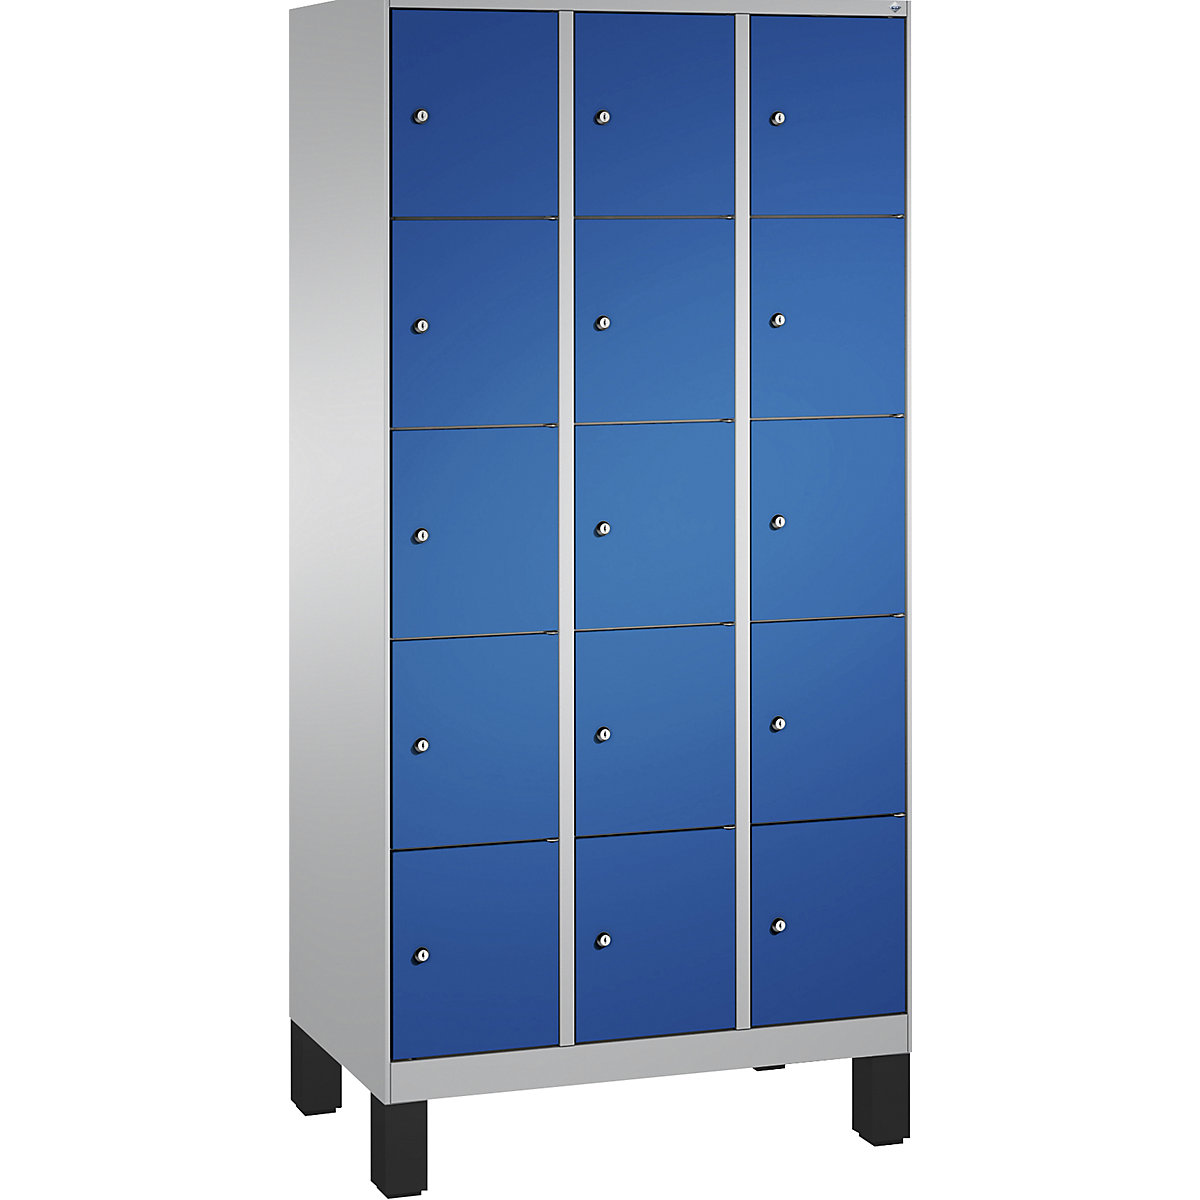 EVOLO locker unit, with feet – C+P, 3 compartments, 5 shelf compartments each, compartment width 300 mm, white aluminium / gentian blue-11